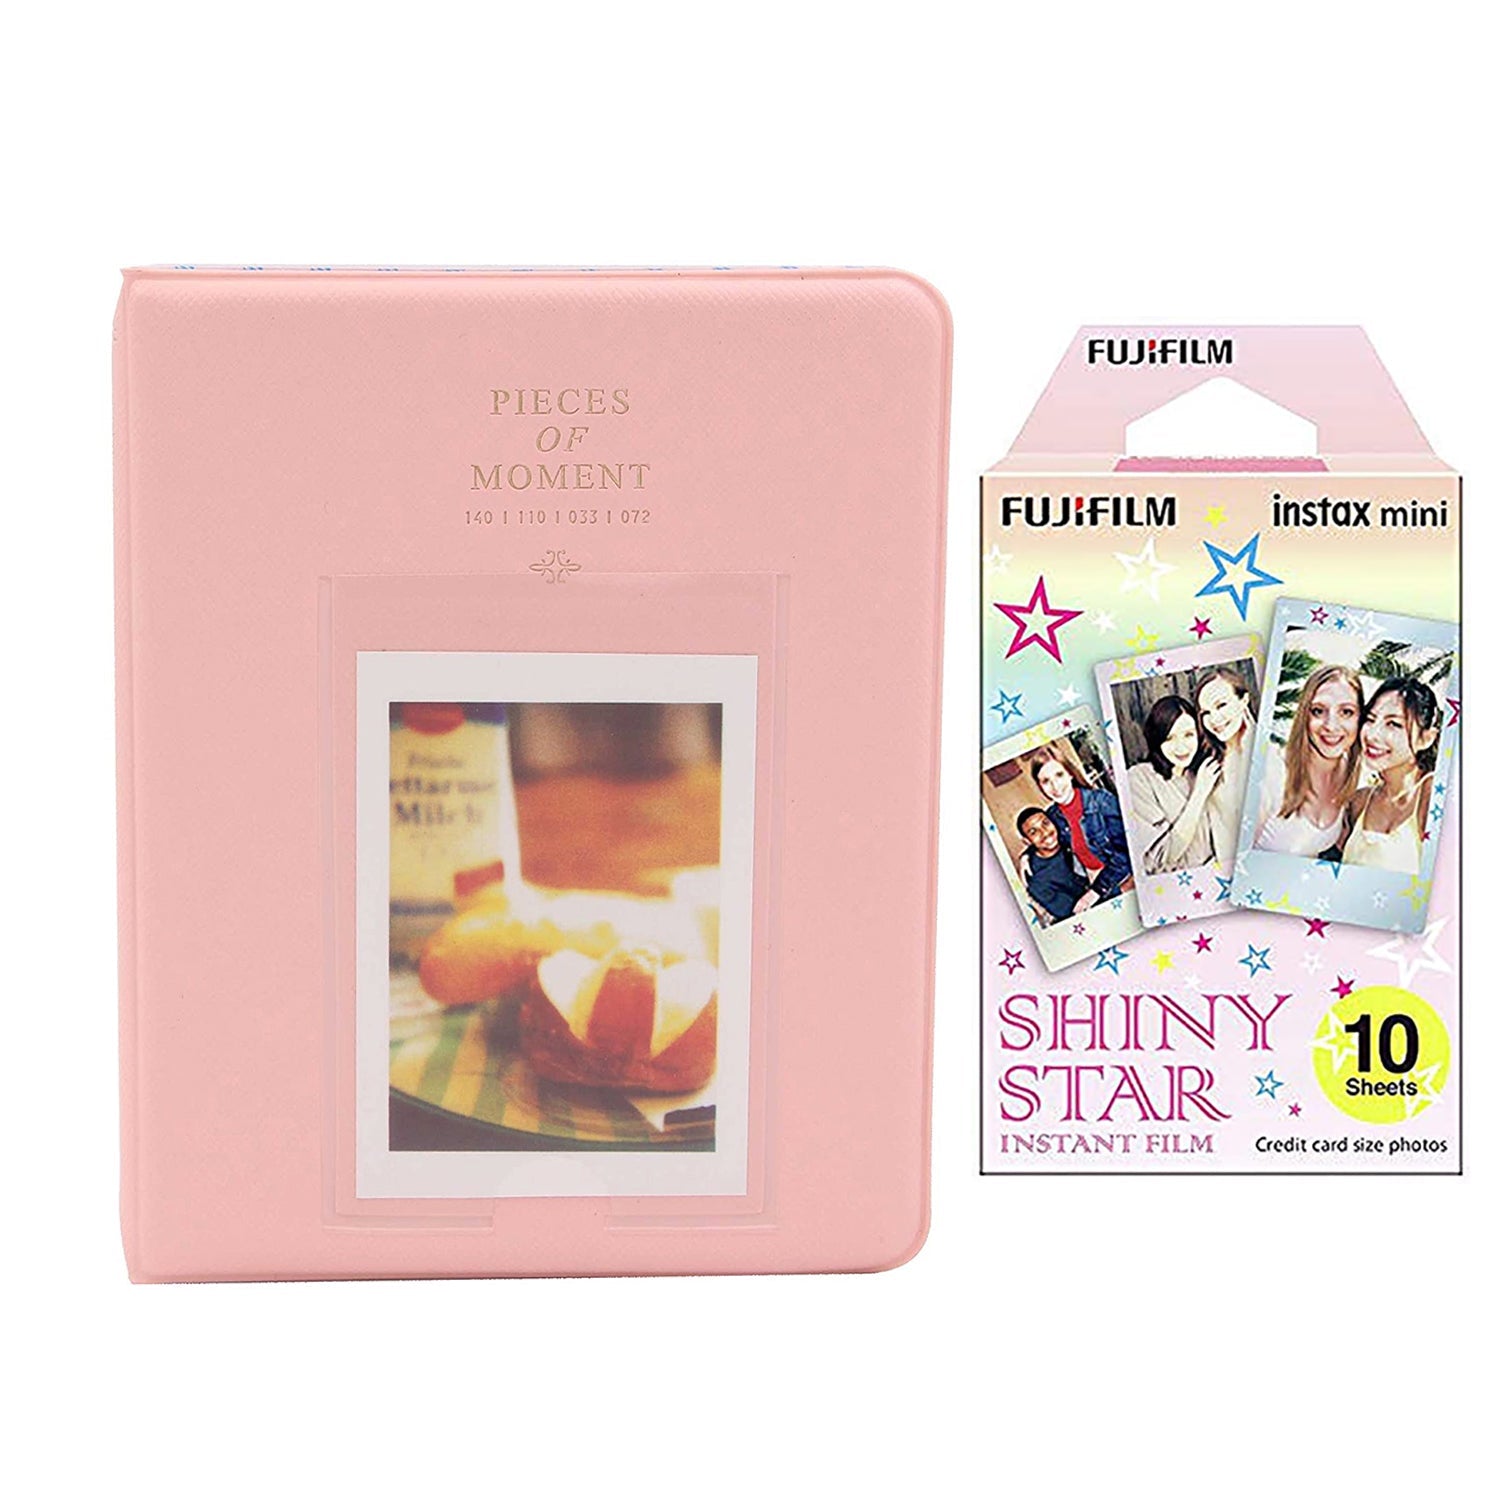 Fujifilm Instax Mini 10X1  shiny star Instant Film with Instax Time Photo Album 64 Sheets (Peach pink)